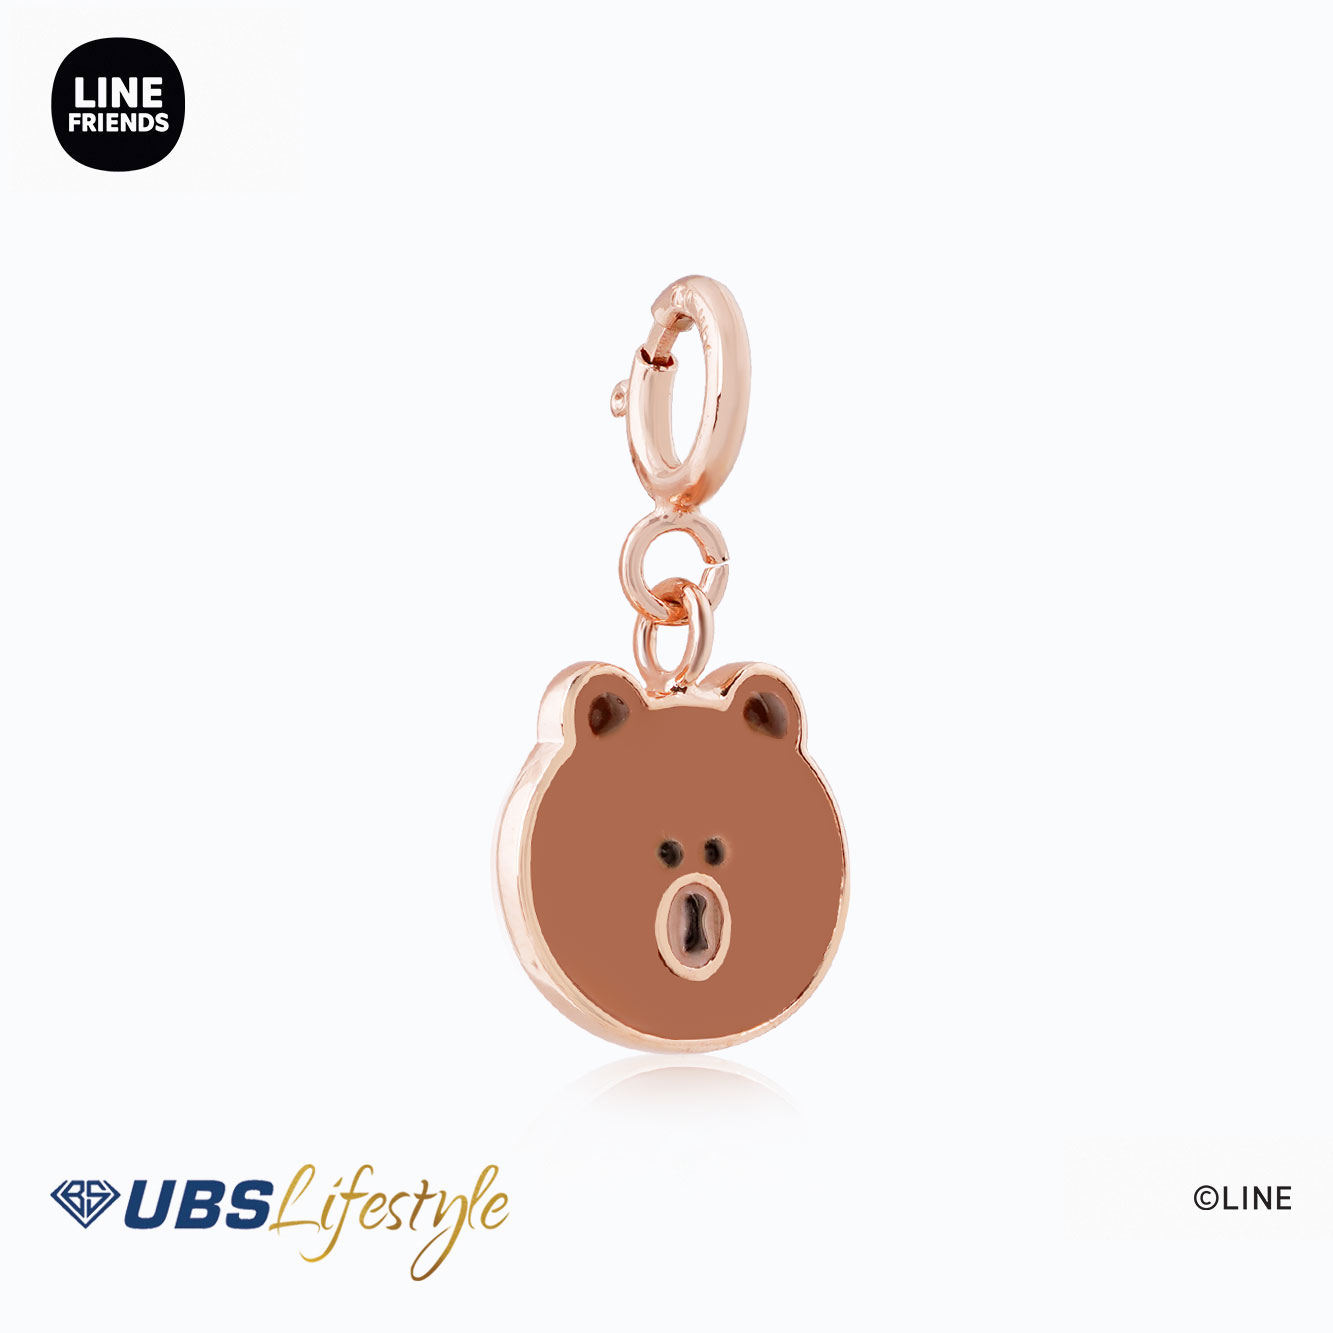 UBS Liontin Emas Line Friends Brown - Chm0021R - 17K